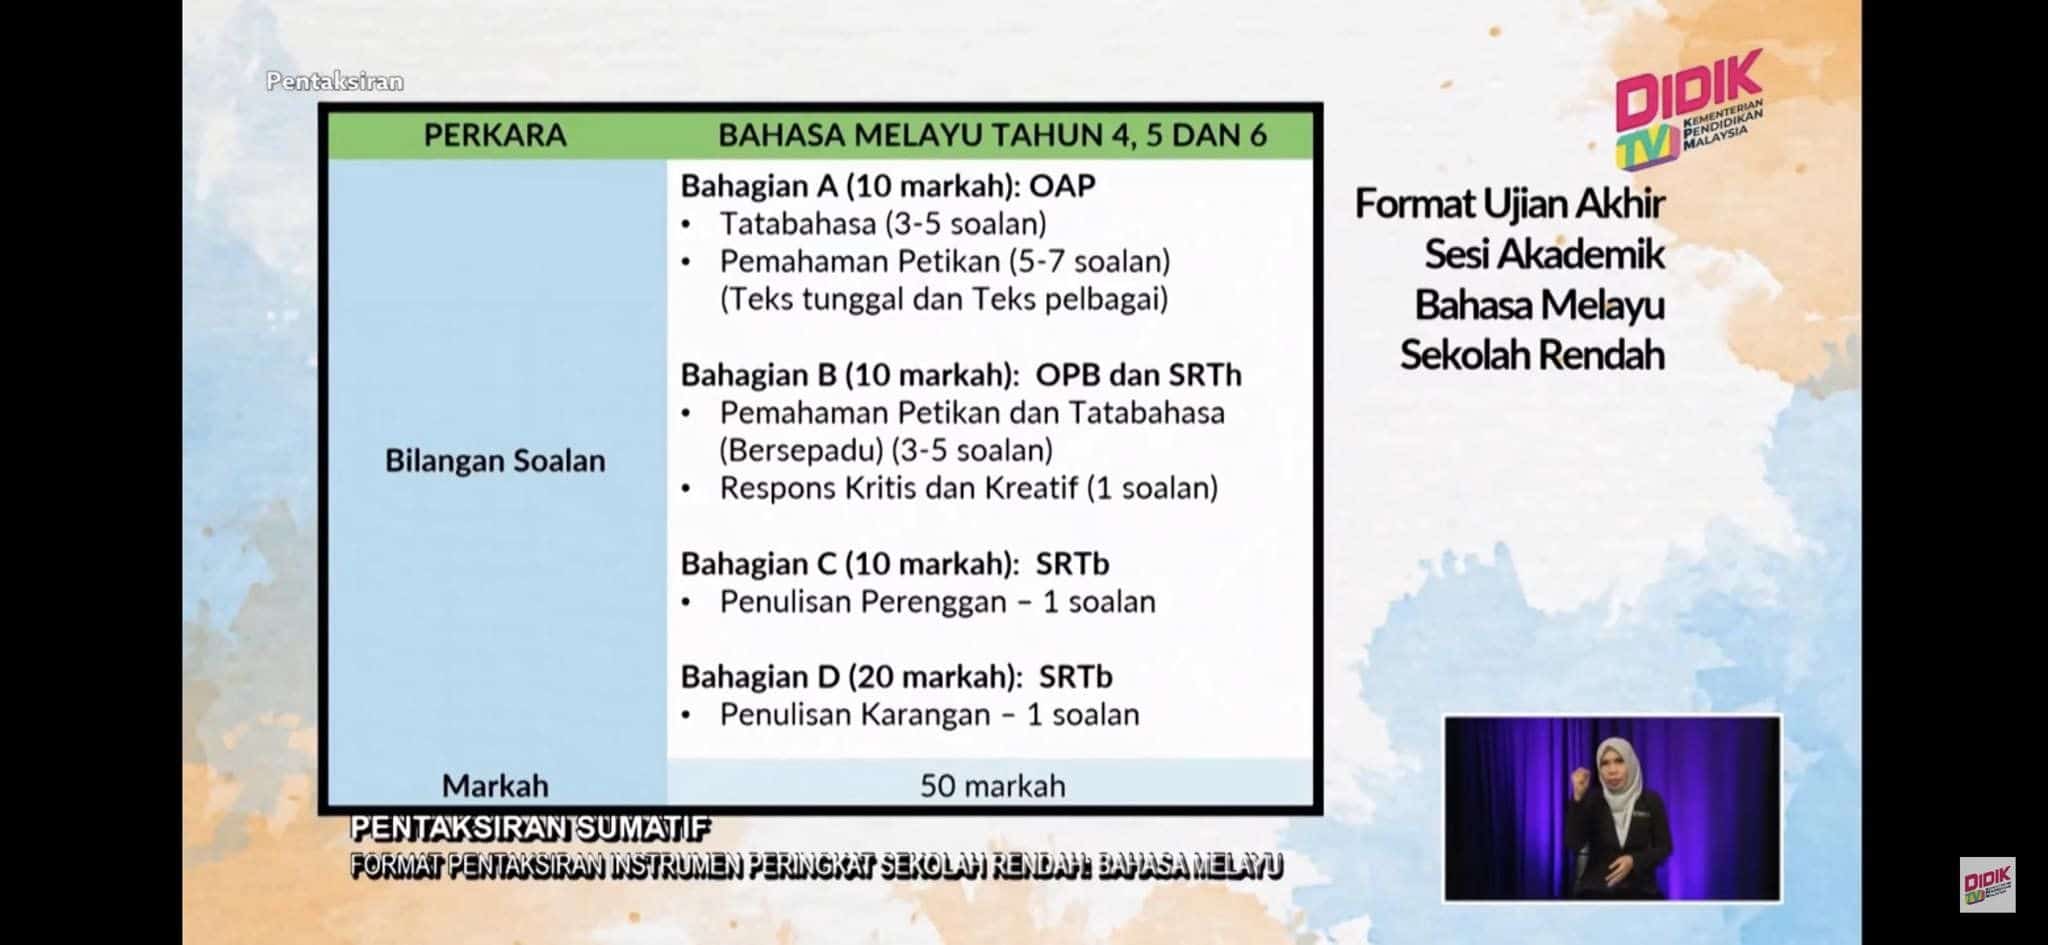 Format Uasa Bahasa Melayu Sekolah Rendah  Riset